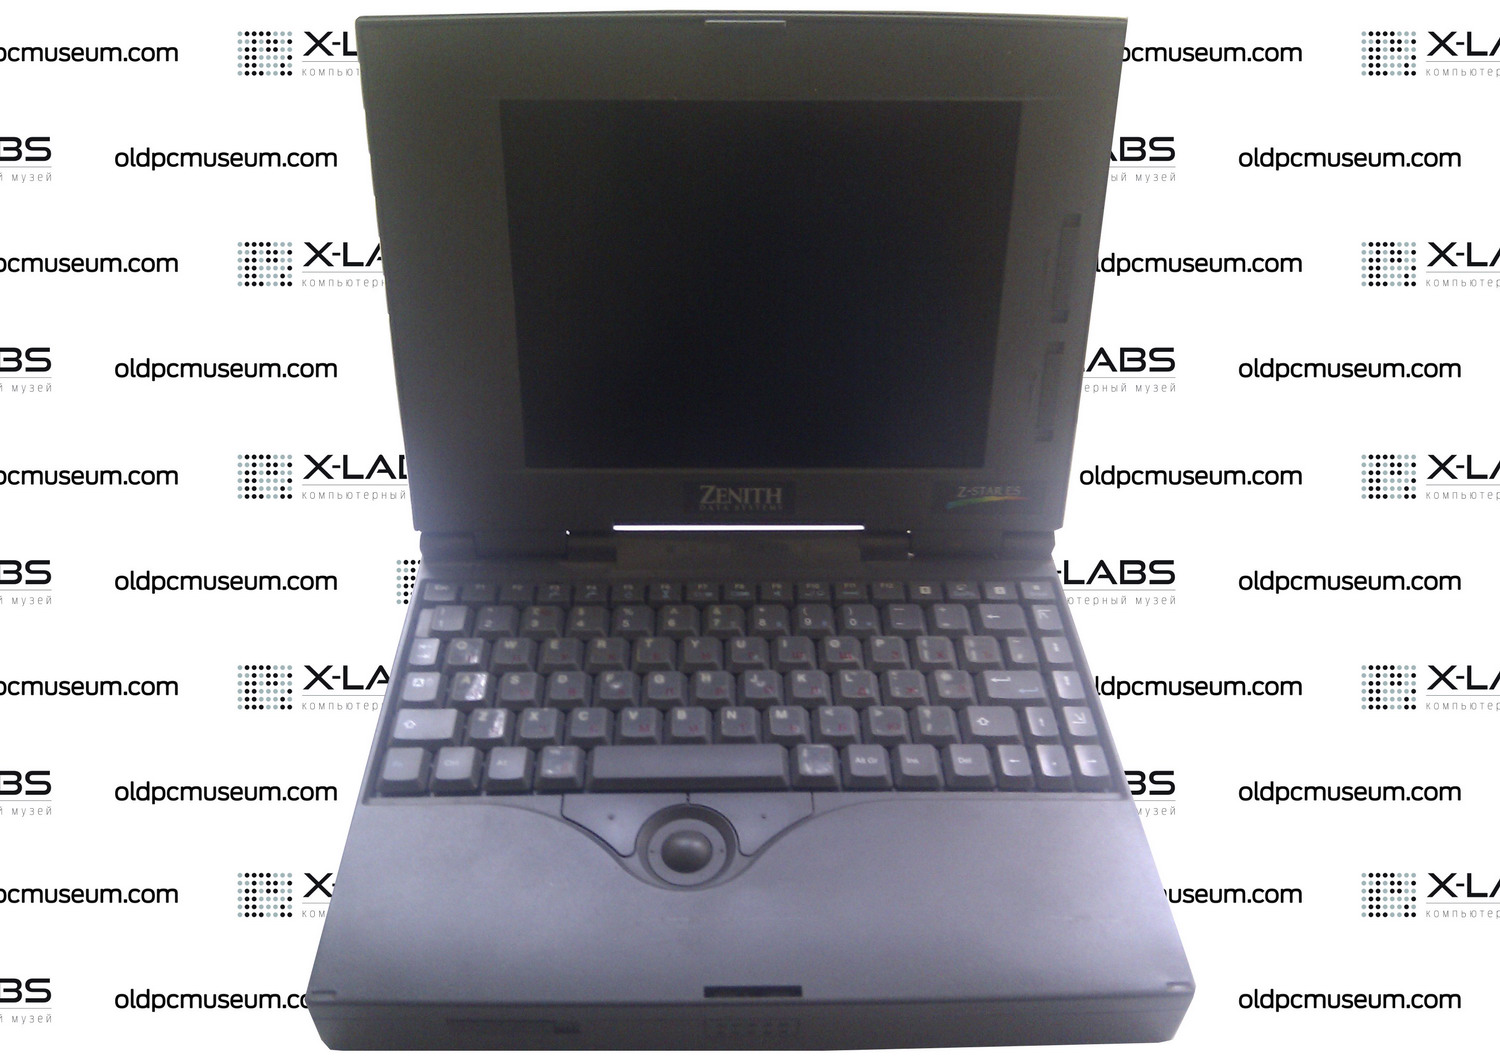 Zenith Z-Star ES i486dx2-50 notebook opened